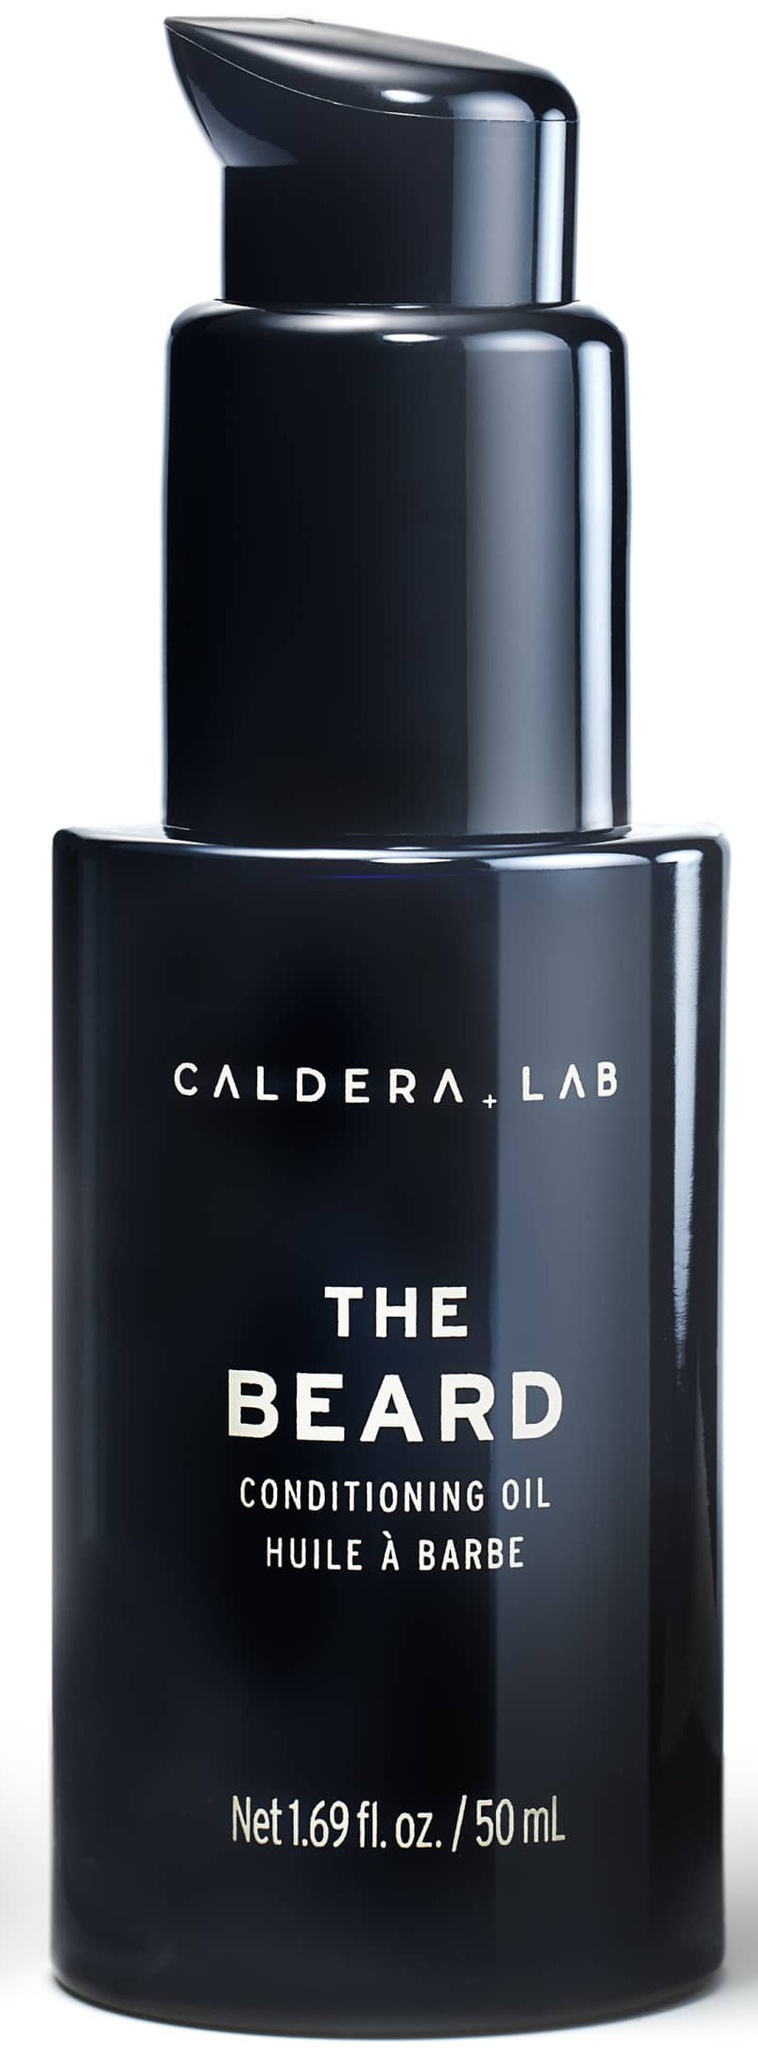 Caldera Lab The Beard